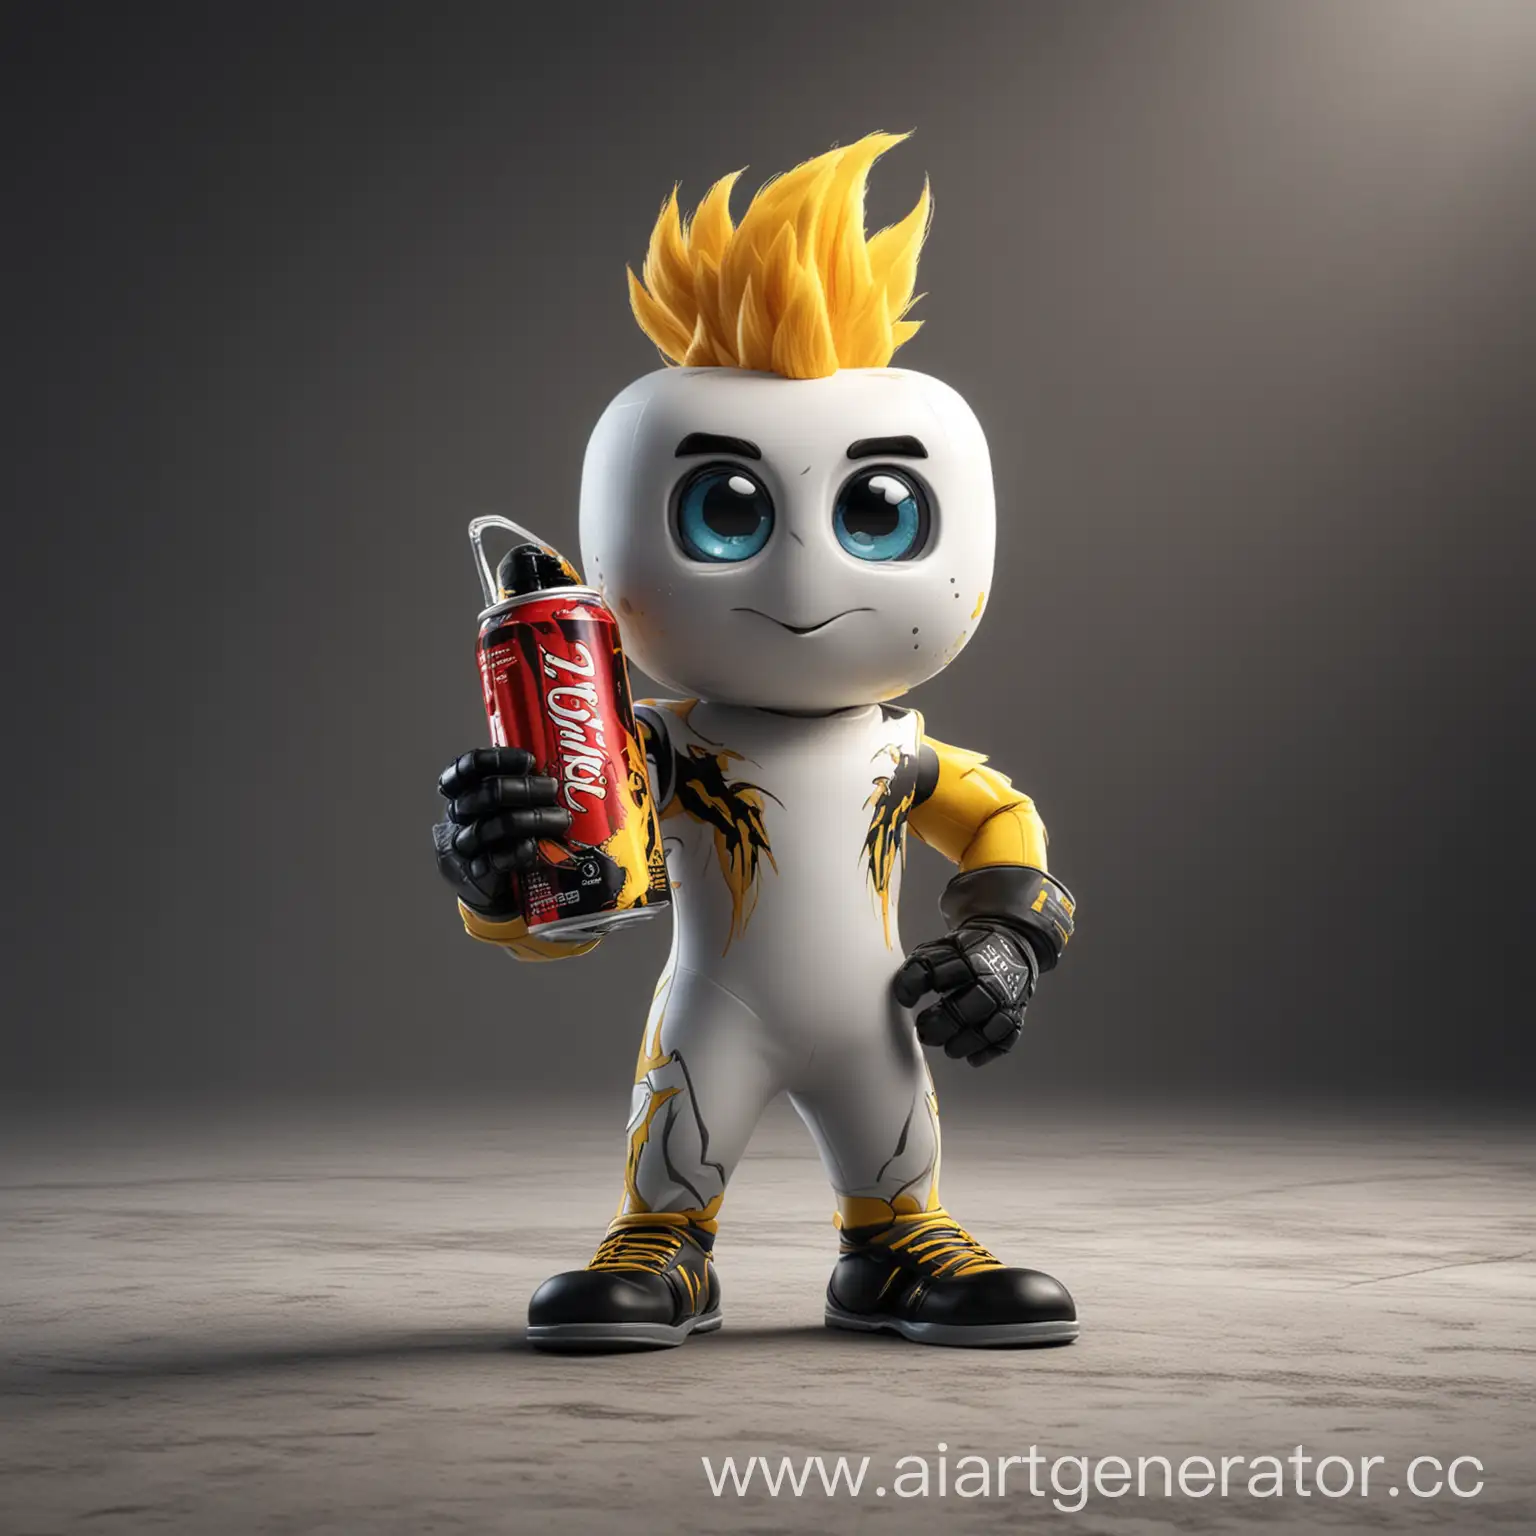 Dynamic-Mascot-Character-of-Energizing-Beverage